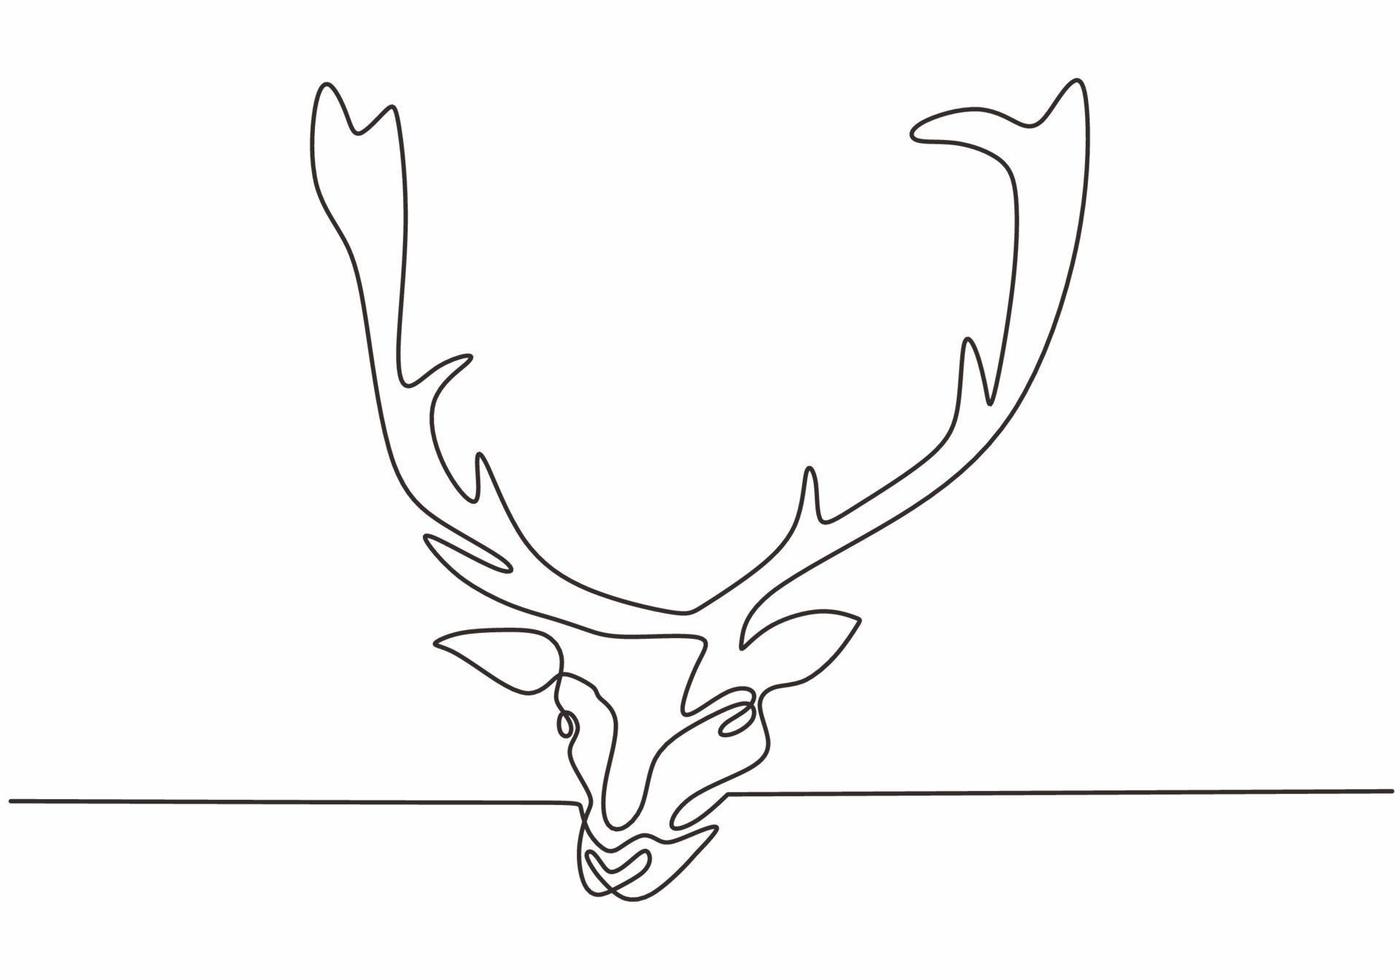 dibujo de línea continua del vector de cabeza de reno.